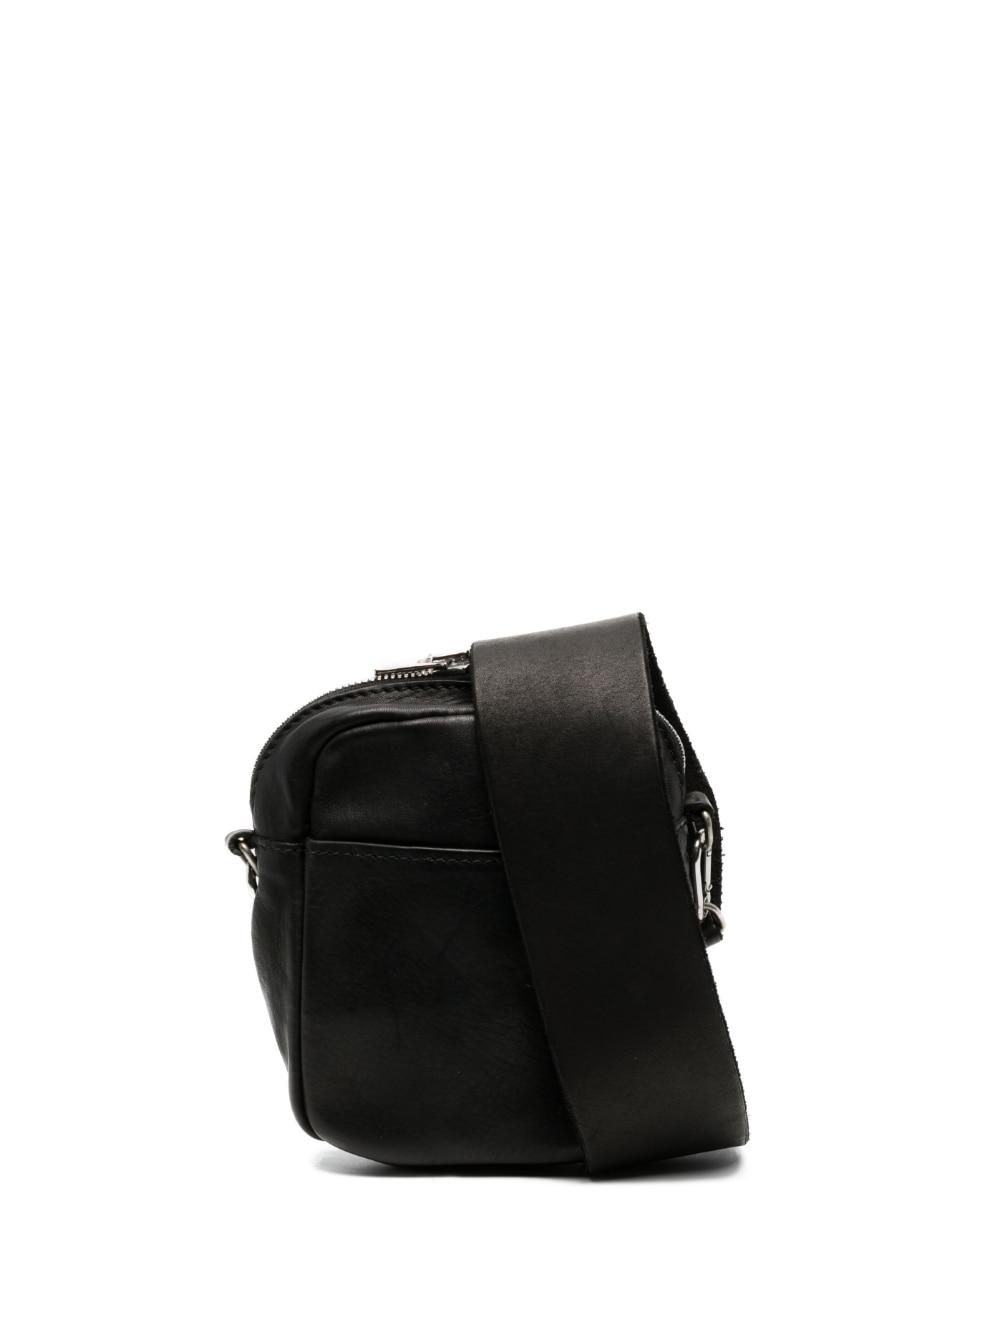 Guidi Leather Crossbody Bag in Black | Lyst